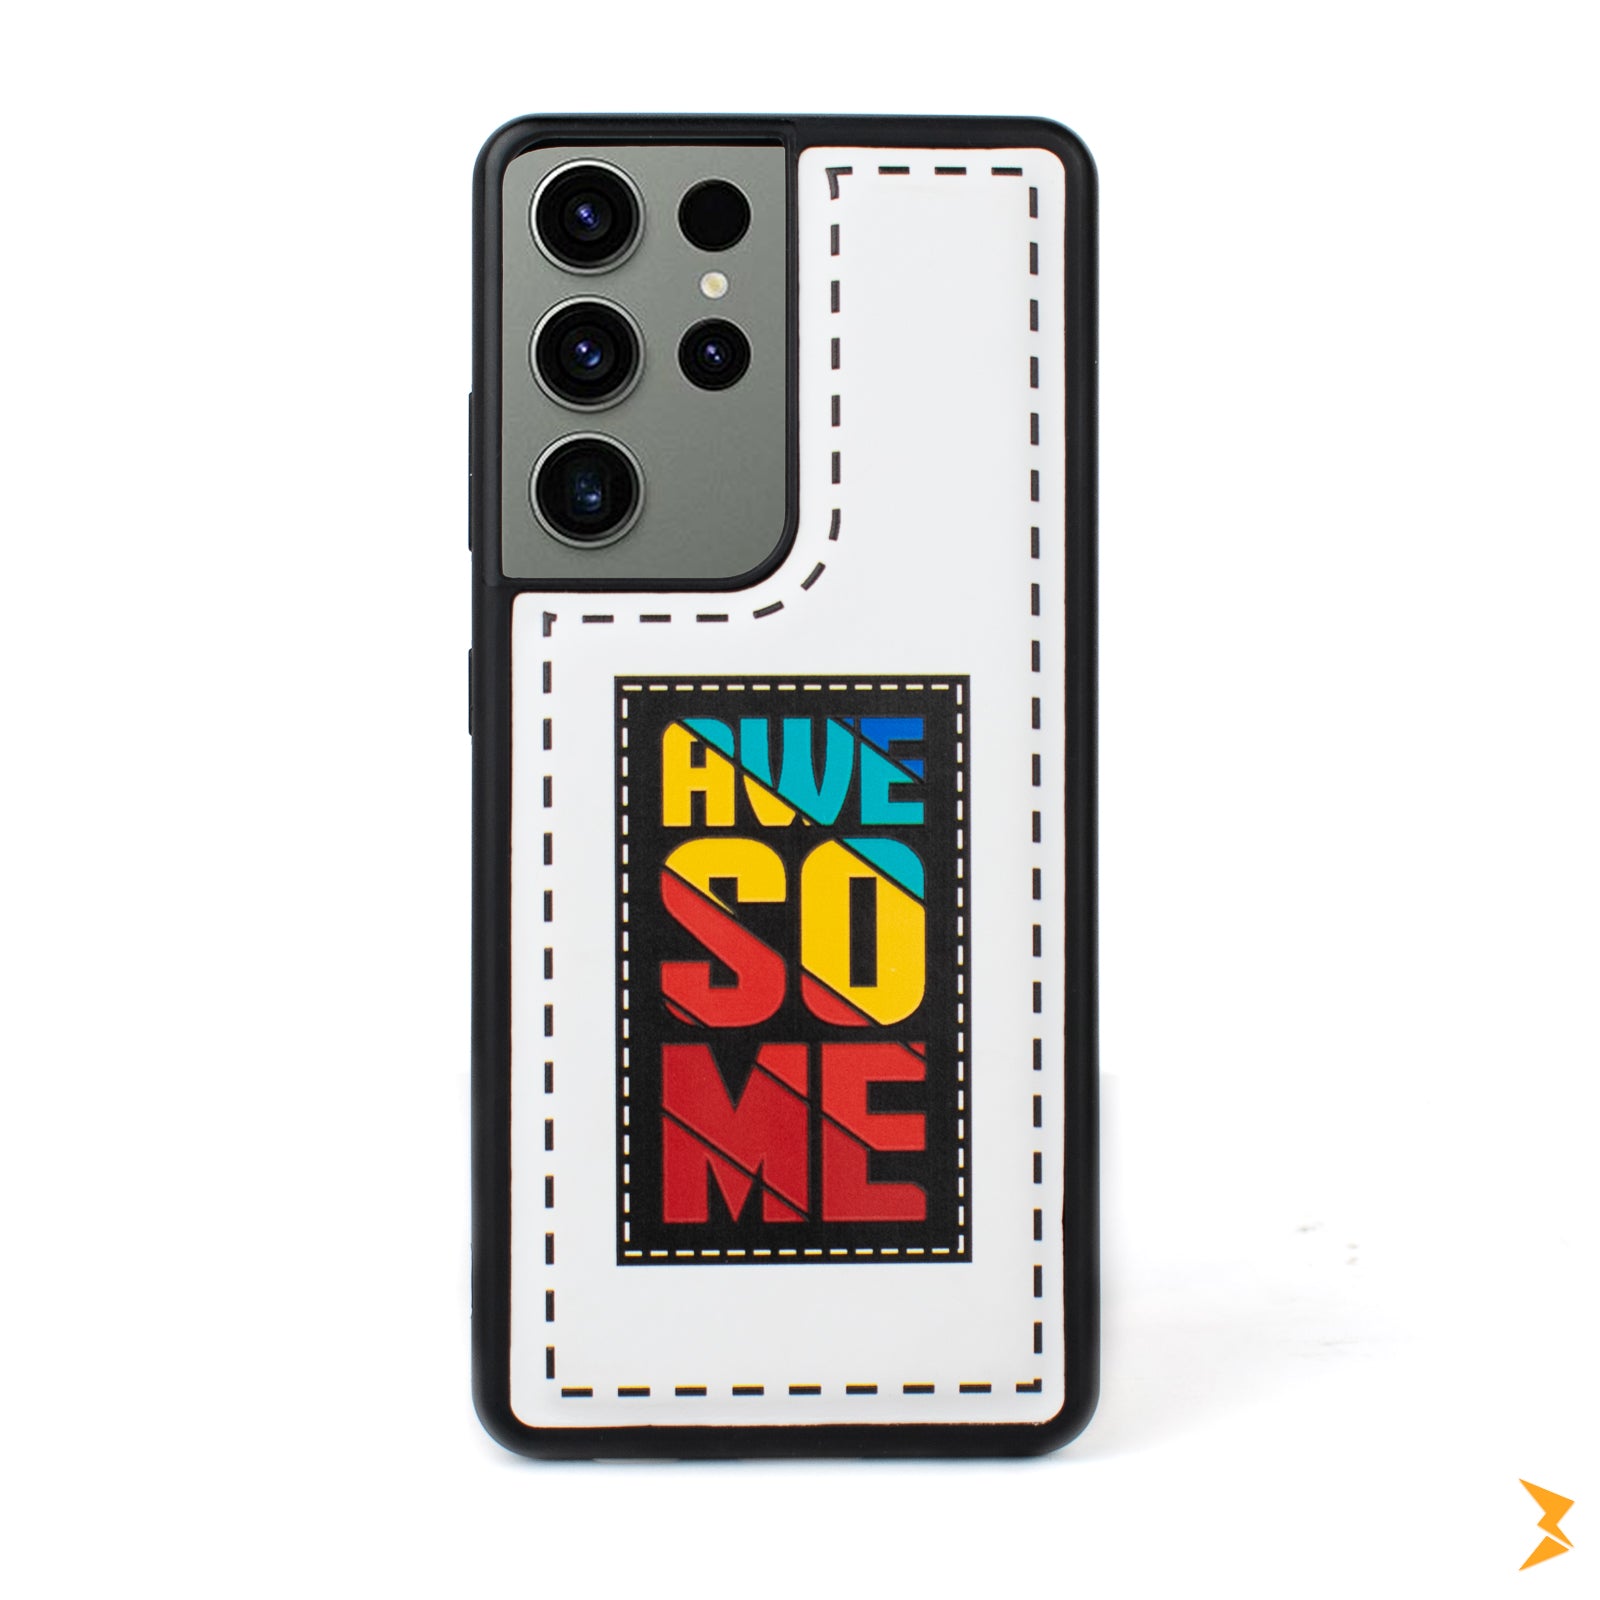 Soft Bump iRon Case Samsung S21 Ultra